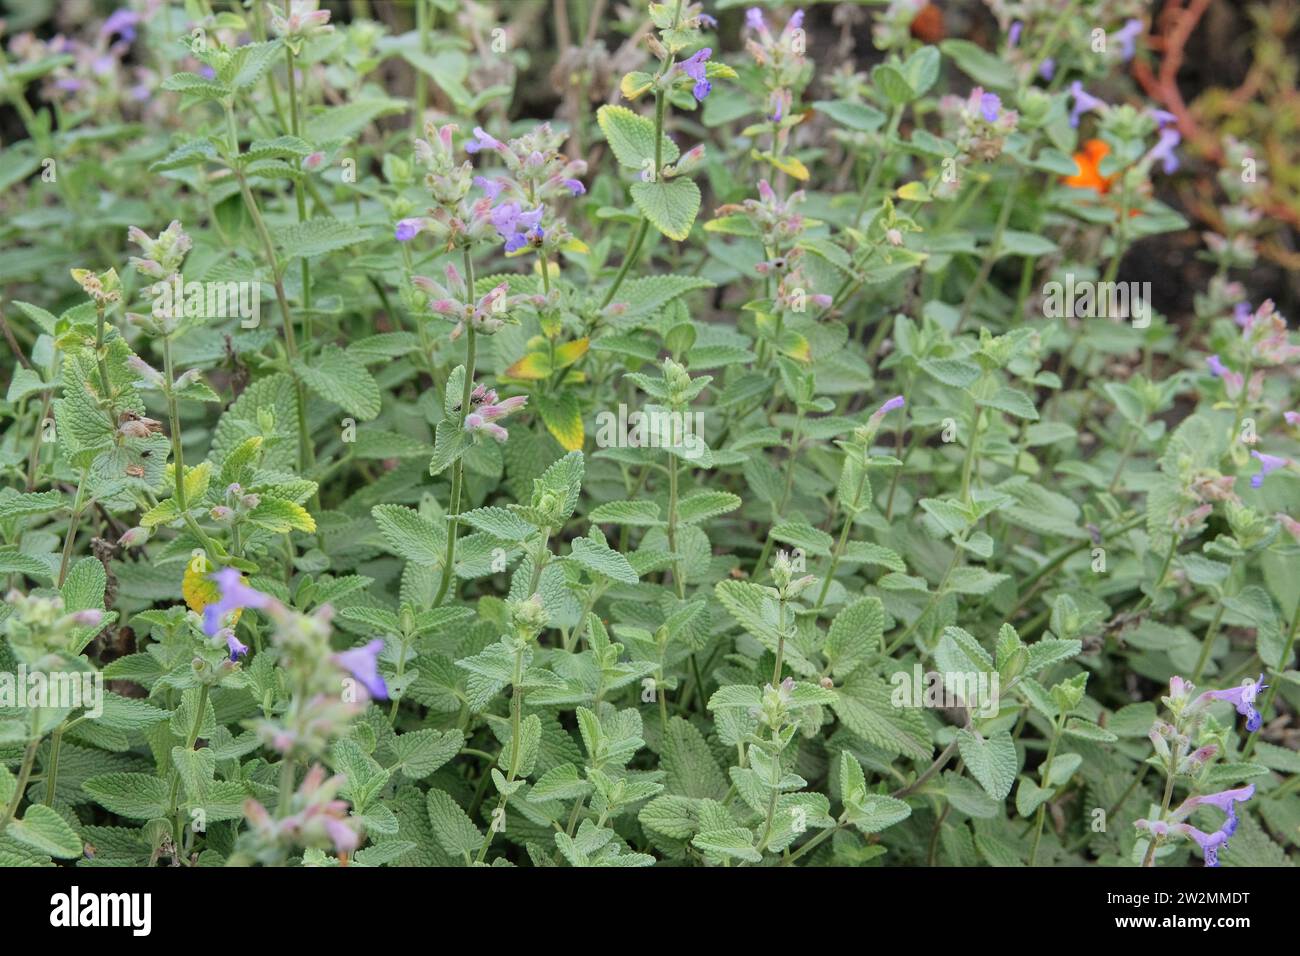 Catnip in garden. Catnip background in flowers garden. Aromatic flowers in rural garden. Stock Photo